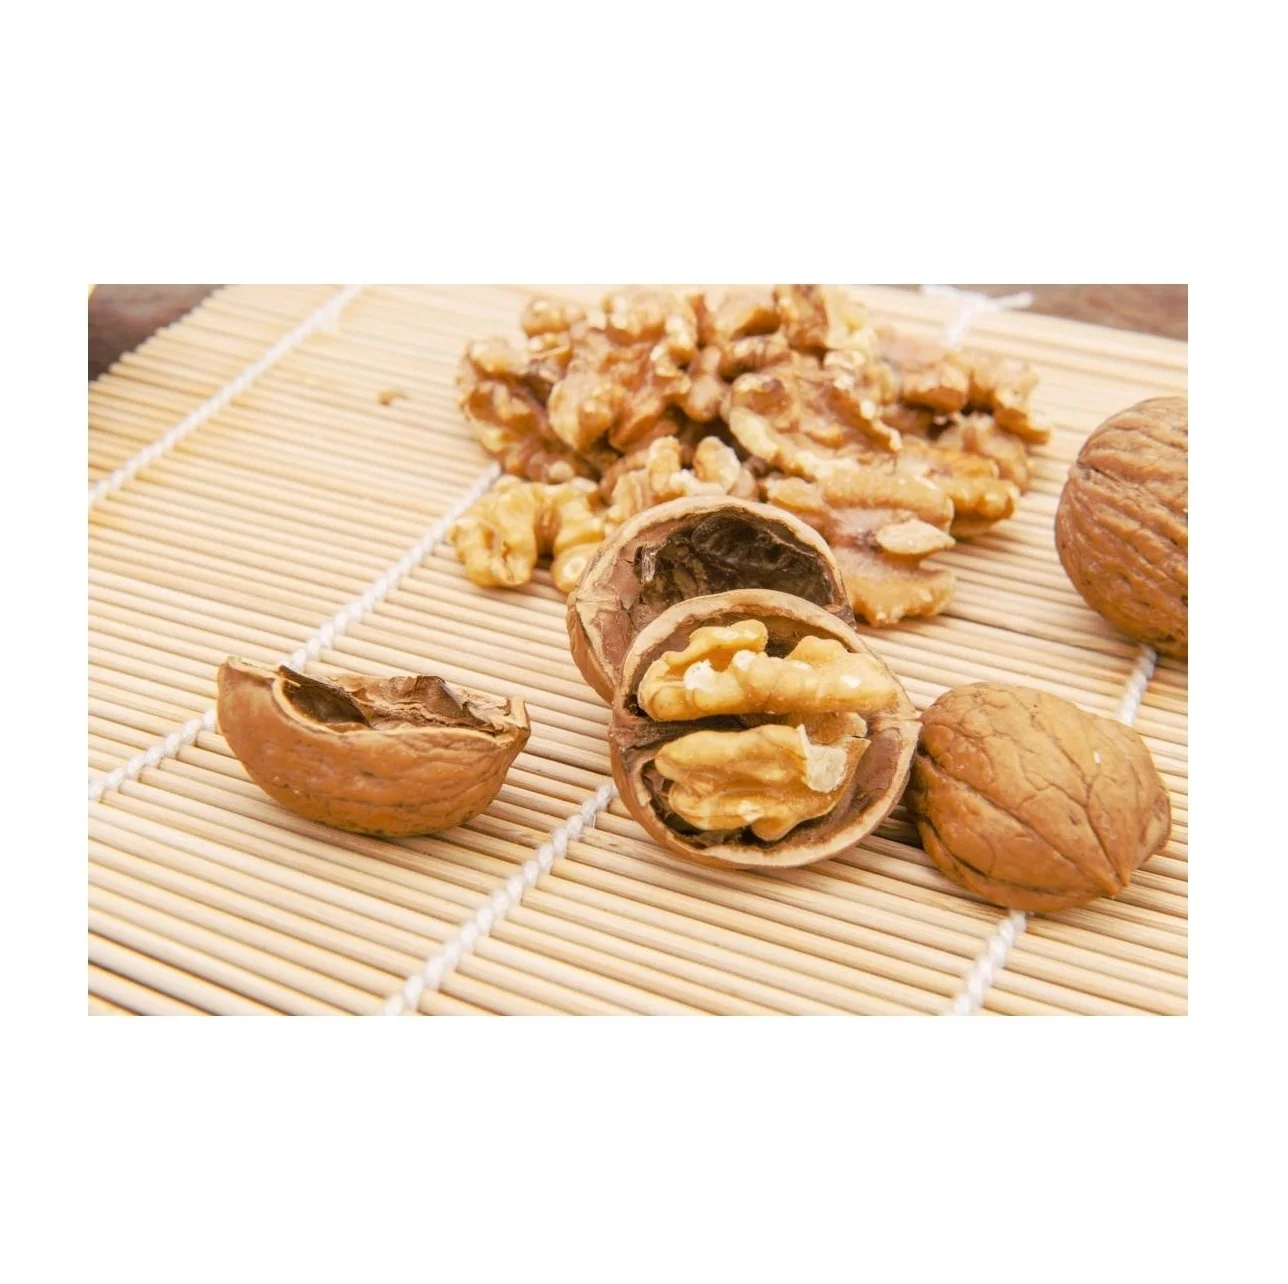 Best price WALNUTS IN SHELL (dried walnut in shell)